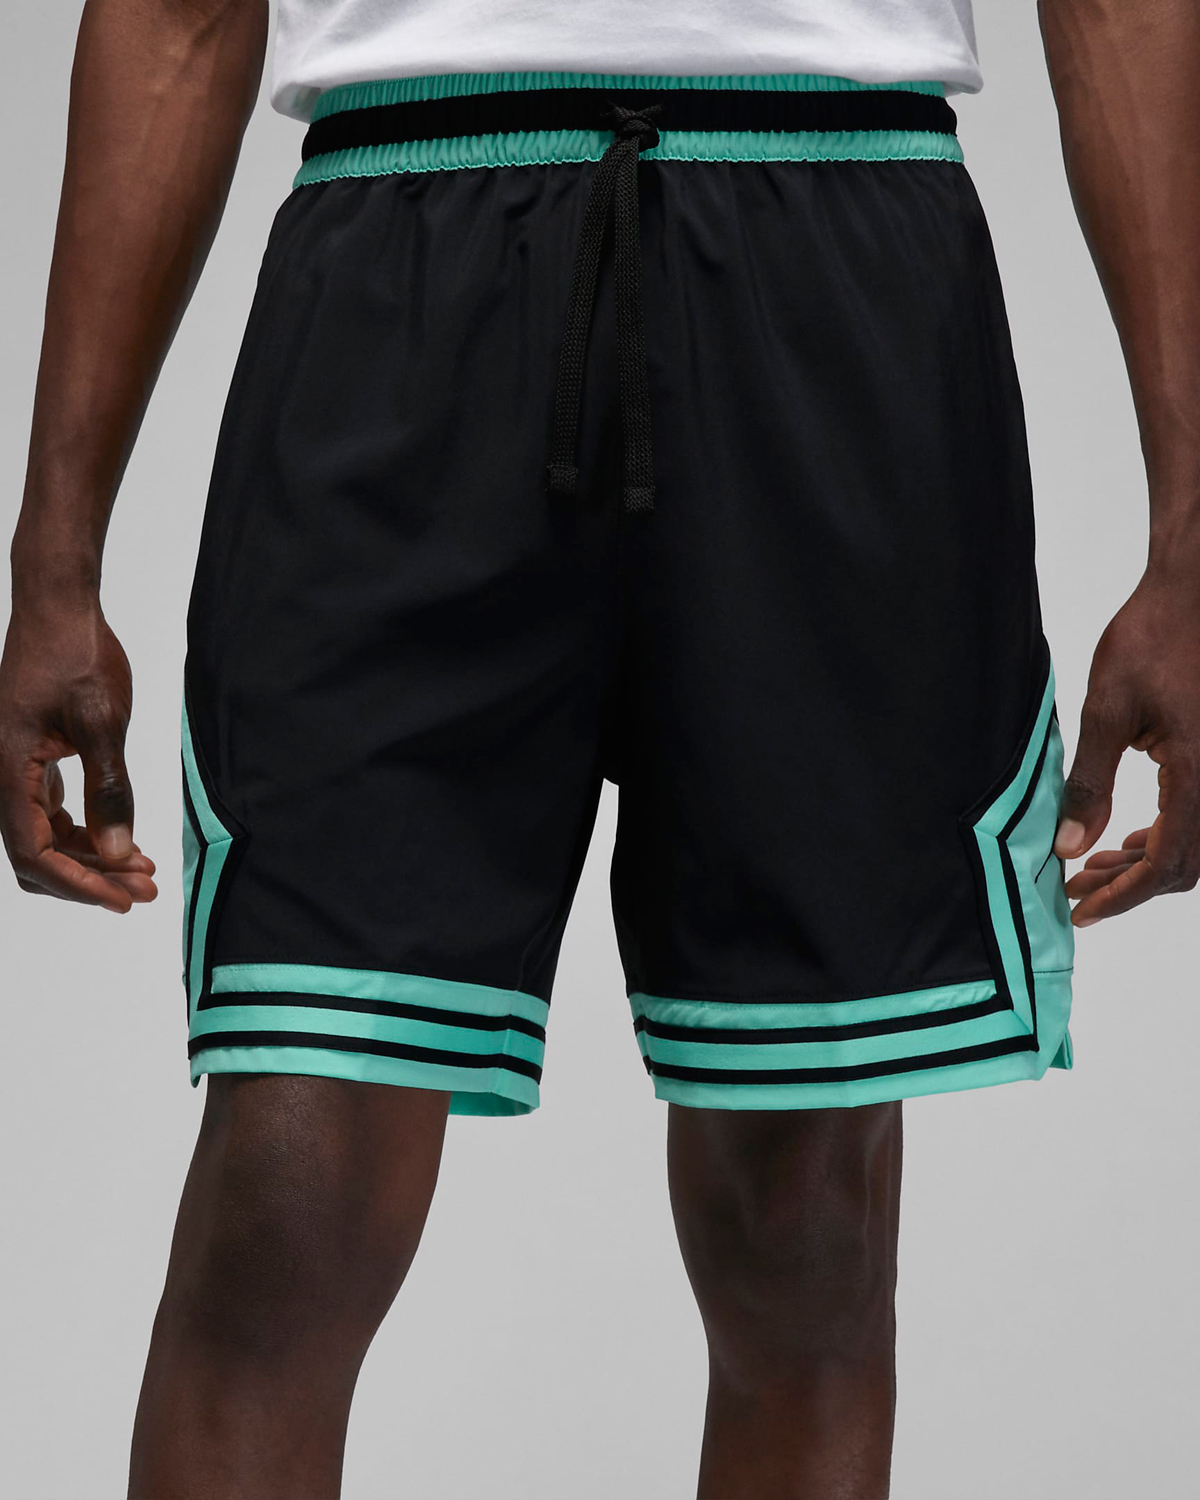 Jordan-Diamond-Shorts-Black-Green-Glow-1